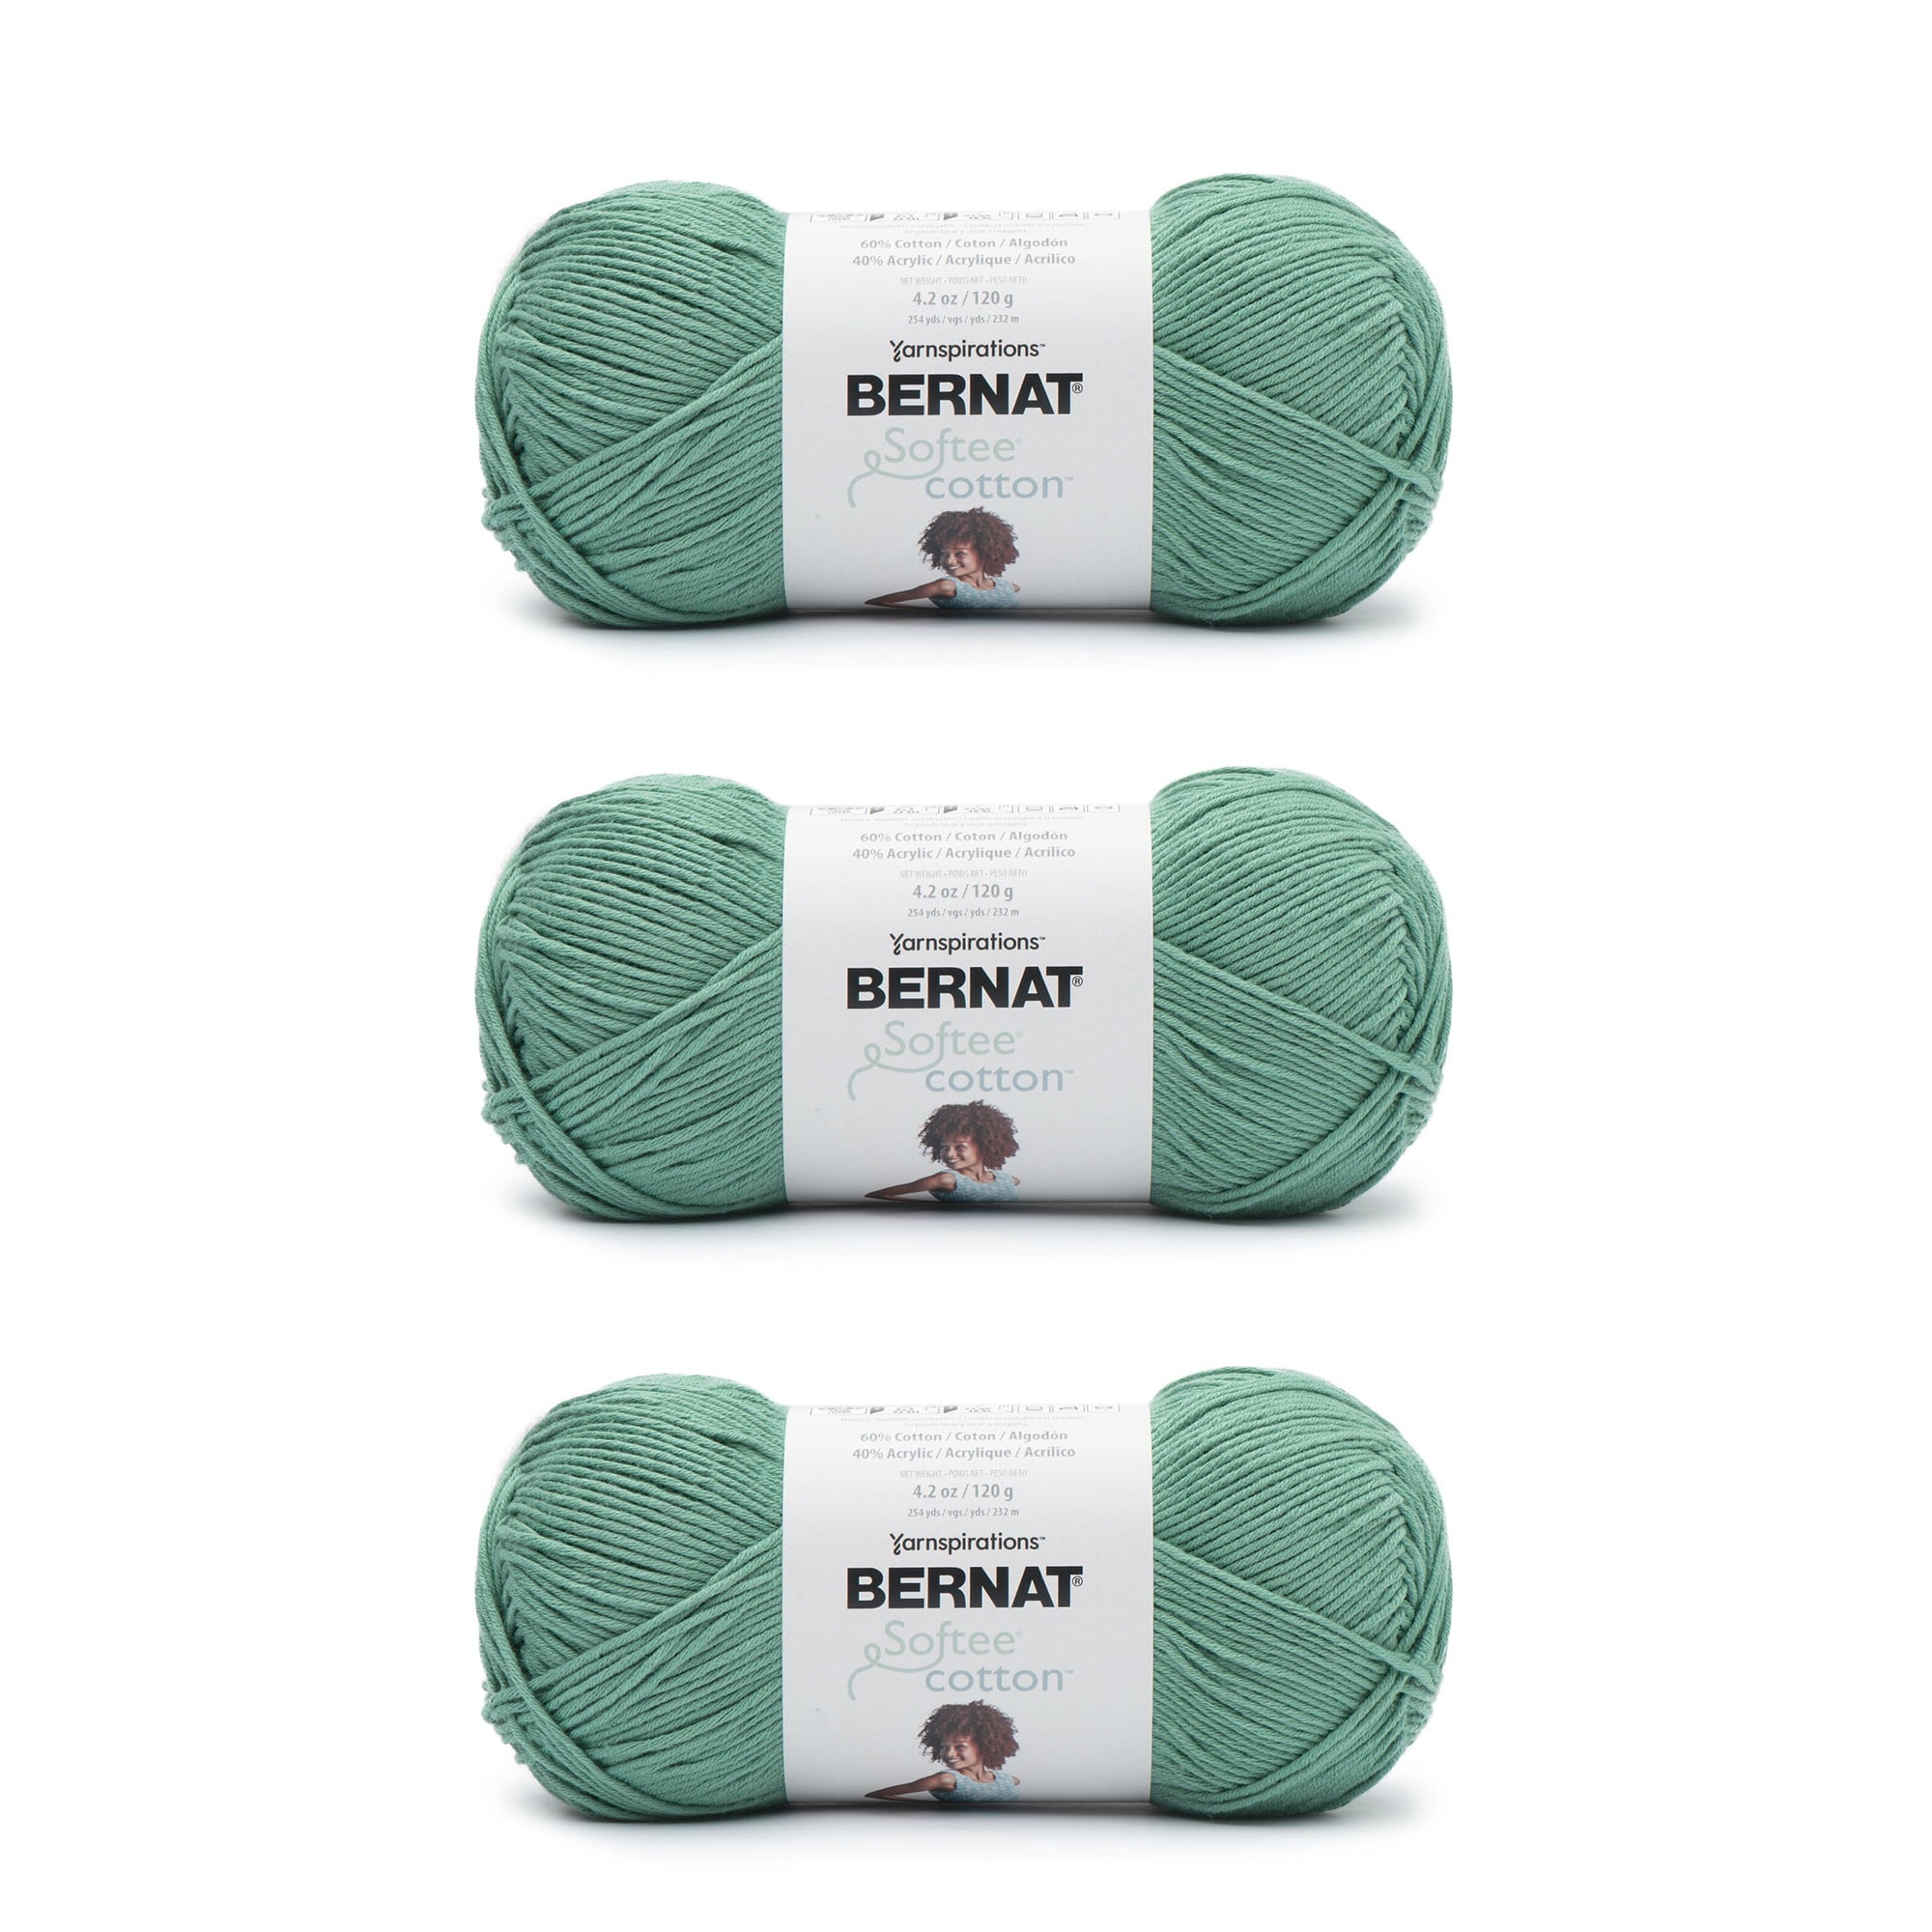  Bernat Softee Cotton Blue Waves Yarn - 3 Pack of 120g/4.25oz -  Nylon - 3 DK (Light) - 254 Yards - Knitting, Crocheting & Crafts